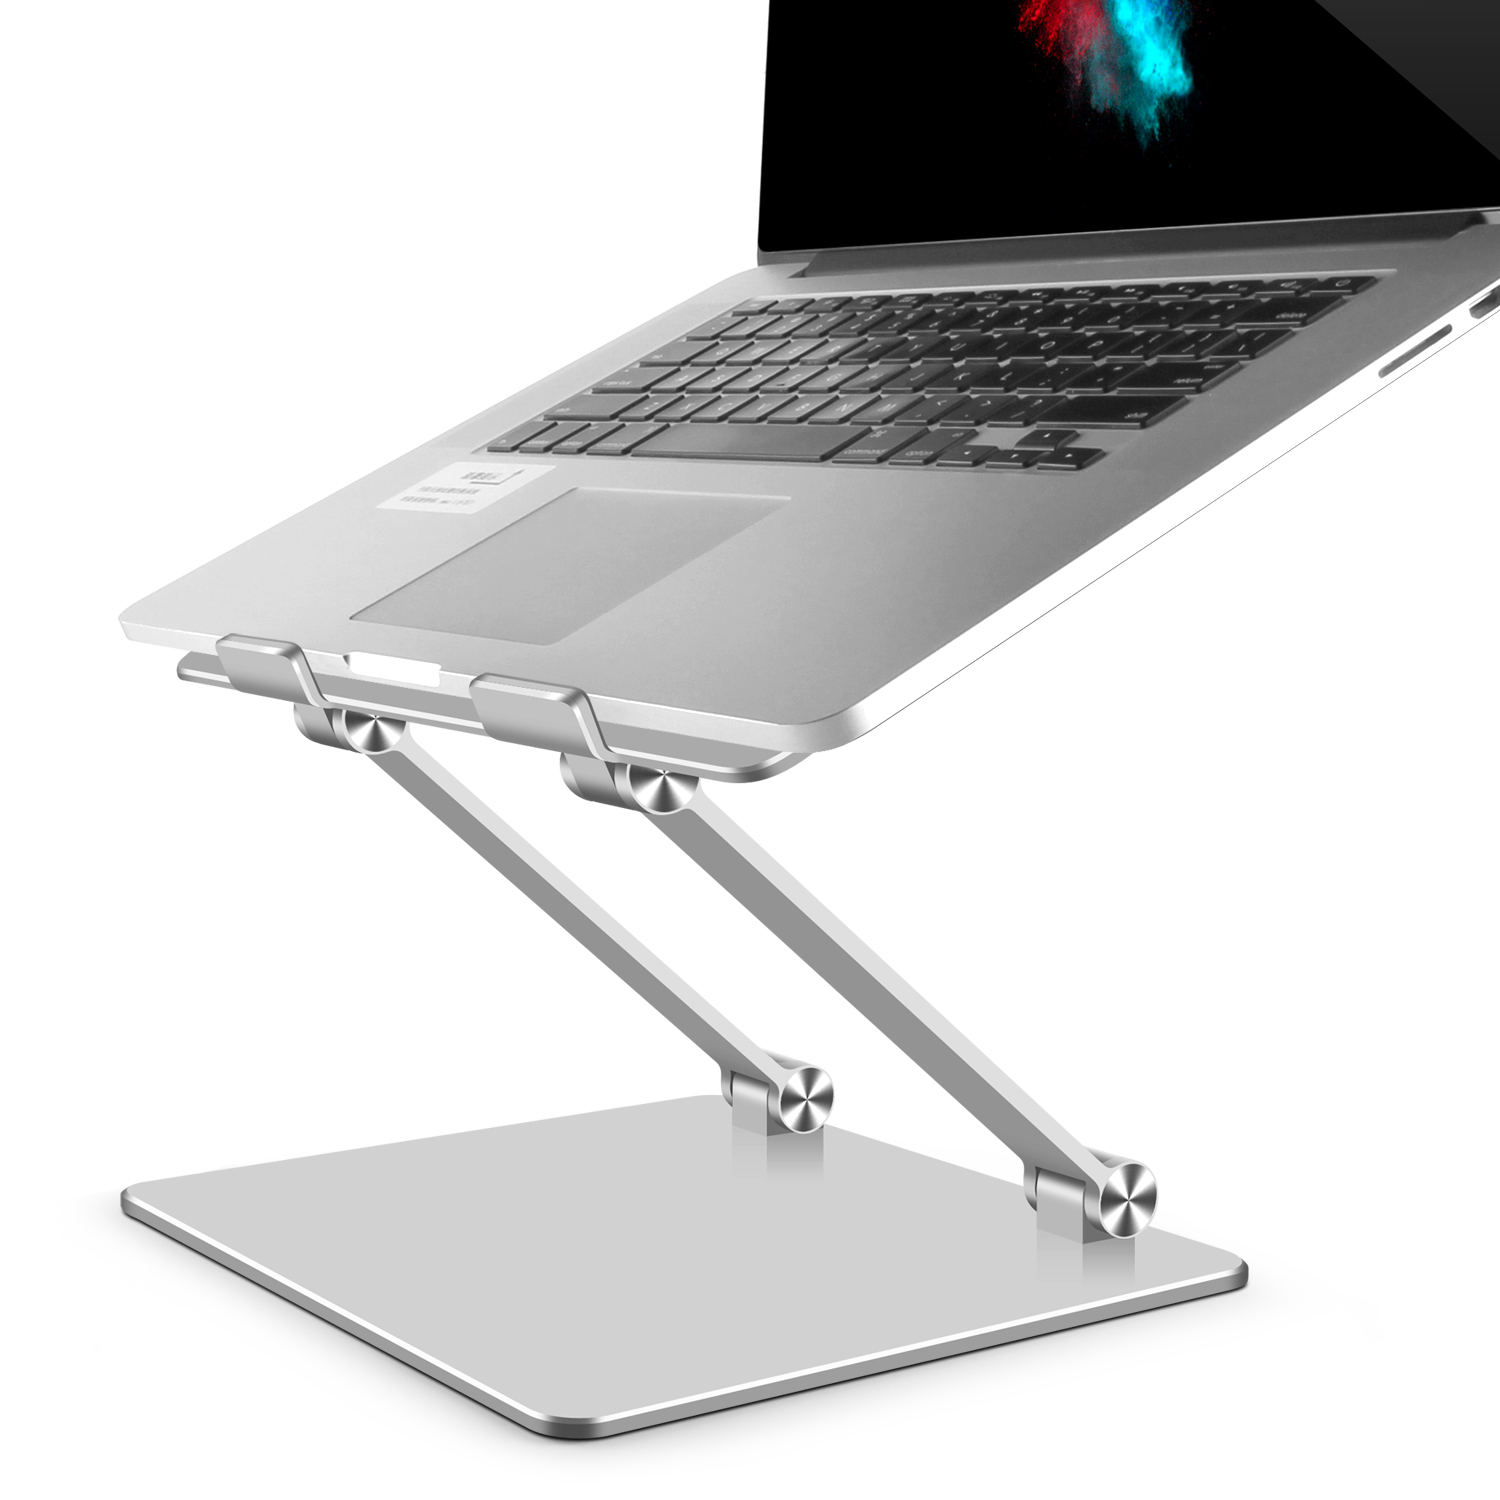 suport-masuta-laptop-pliabil-si-reglabil-din-aluminiu-4171-9820 (1)